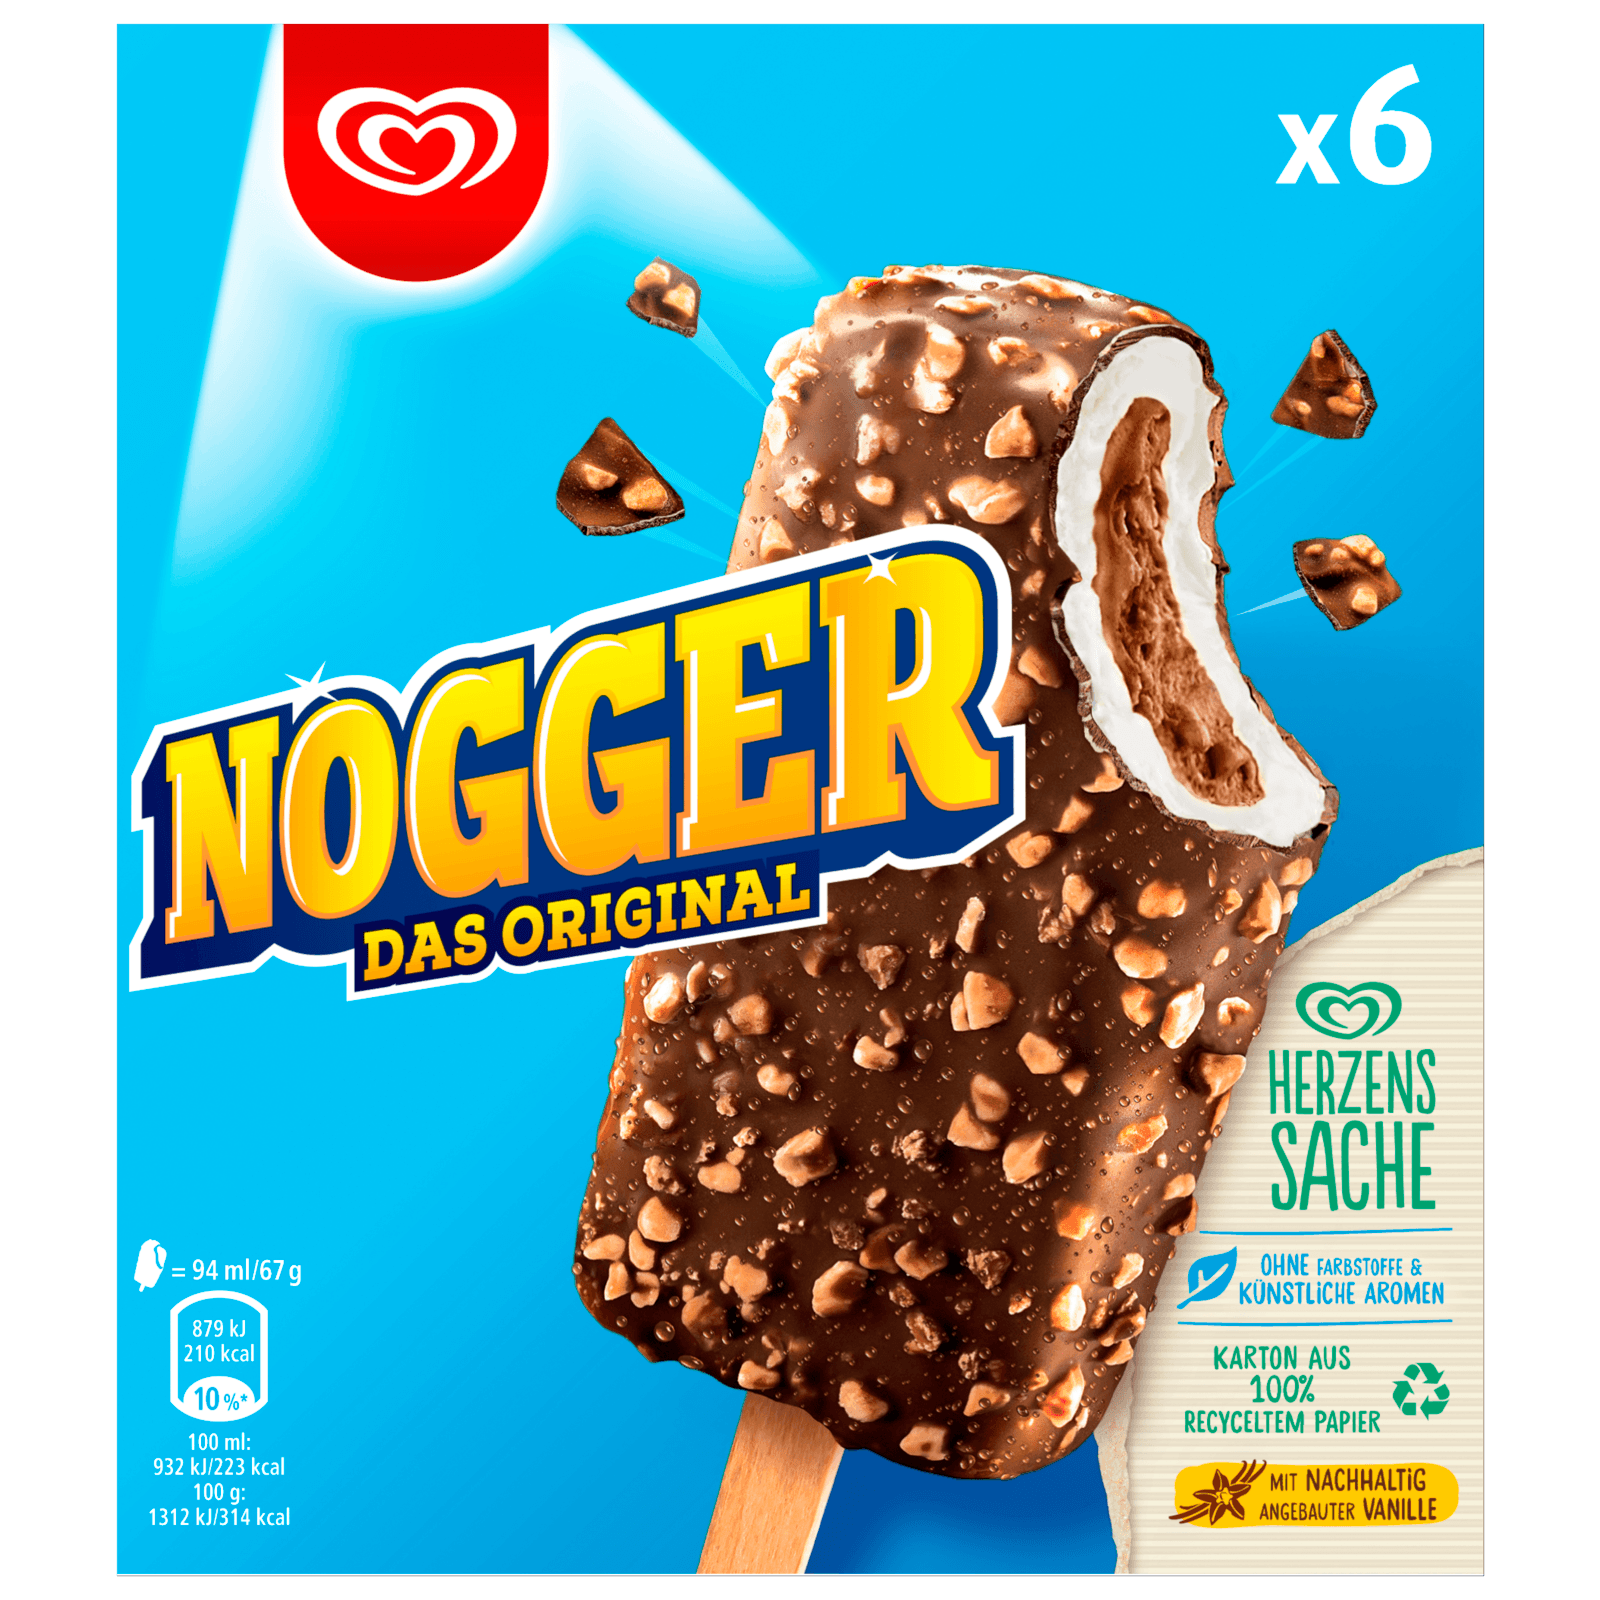 Nogger Familienpackung Langnese Eis 6x94ml bei REWE online bestellen!